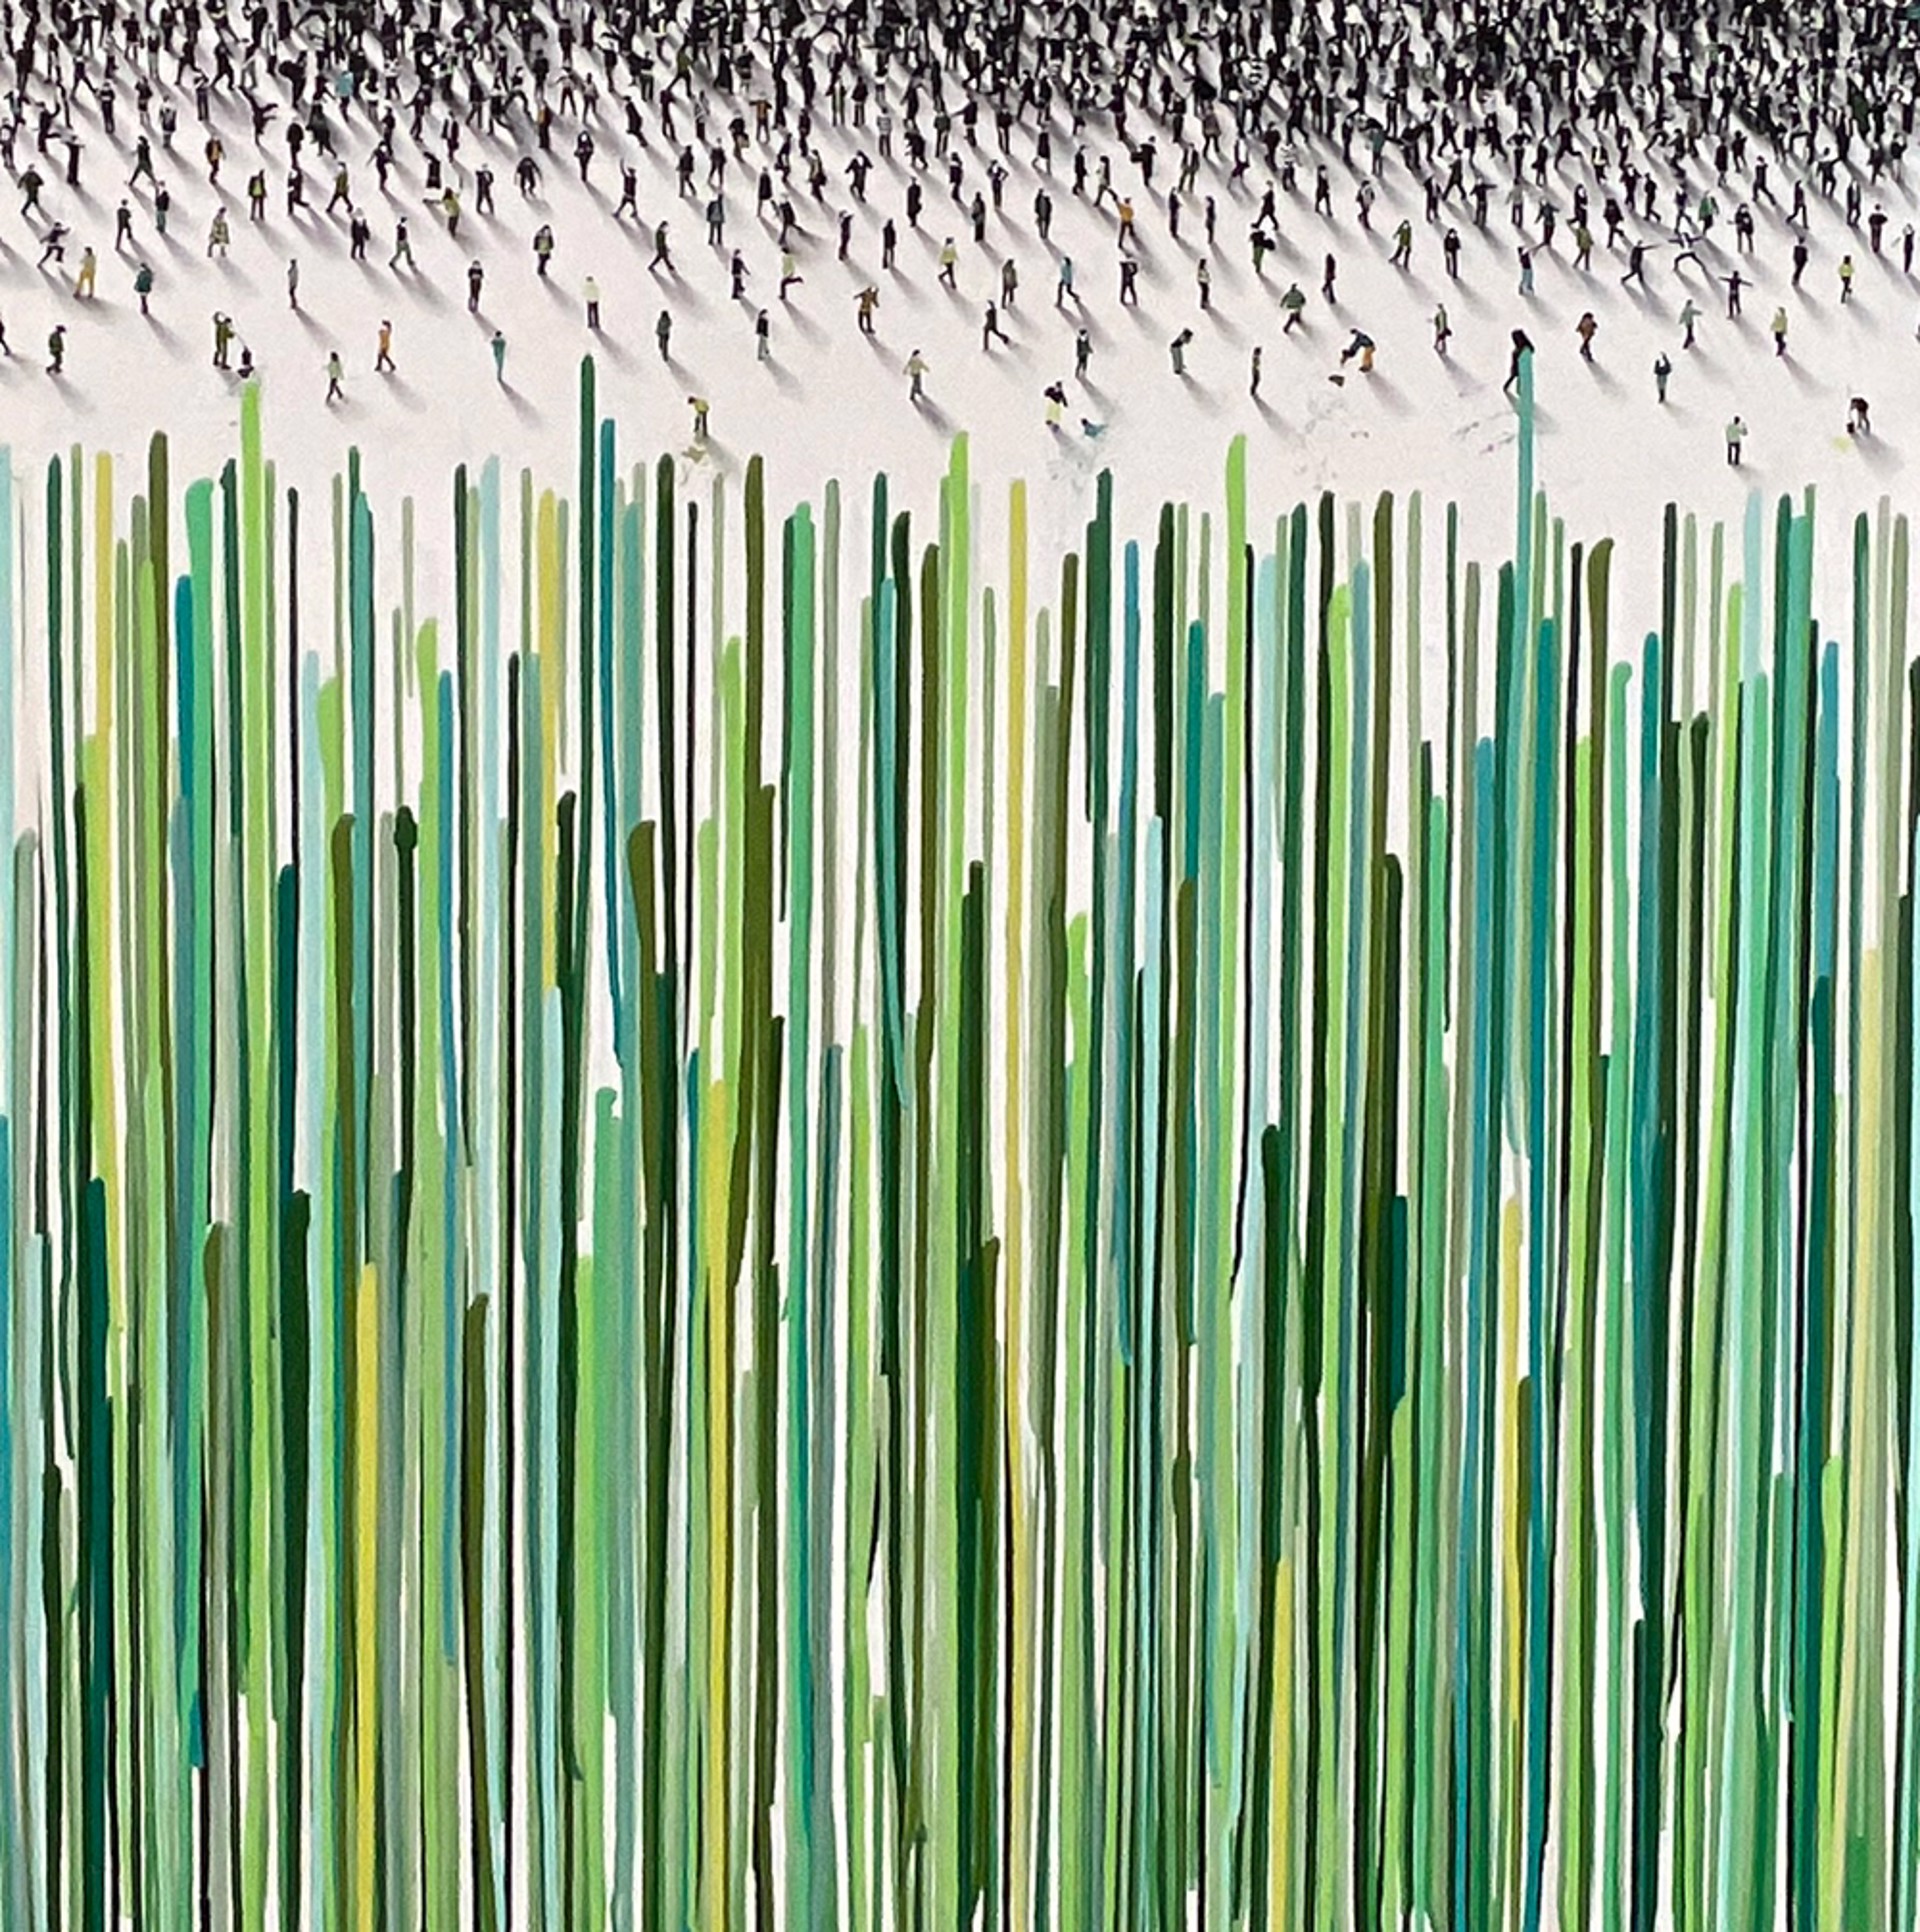 Deluge of Verde by Craig Alan, Populus Homage